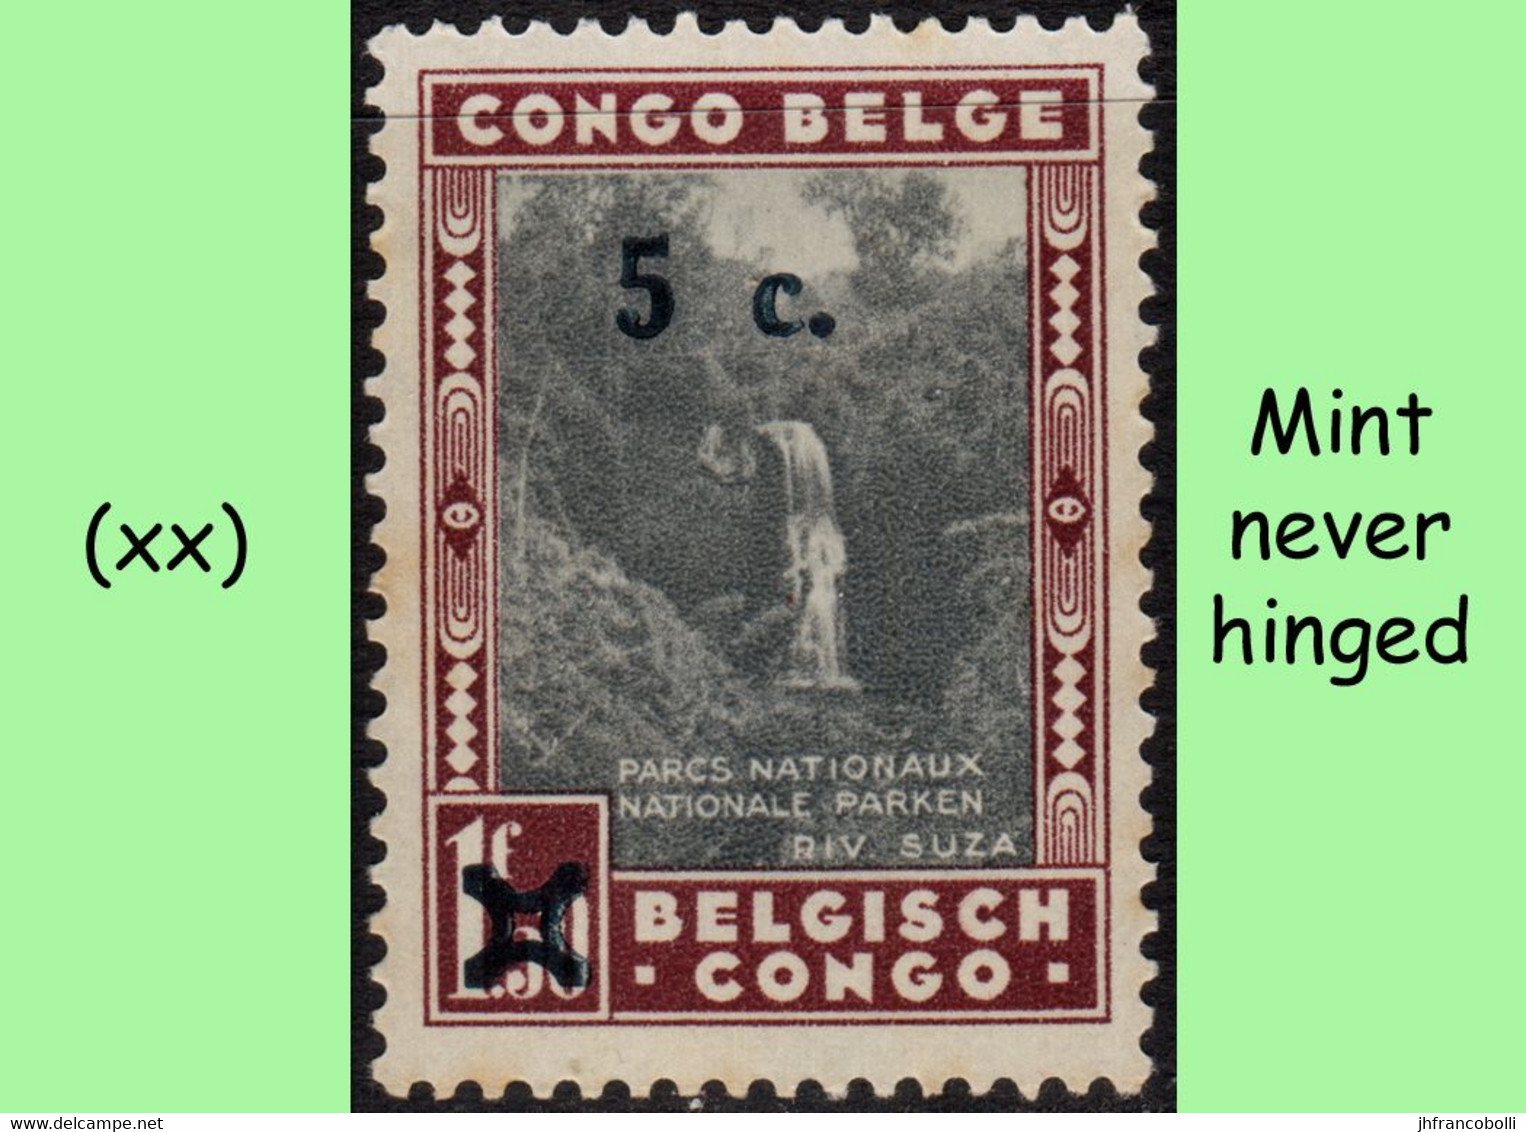 1941 ** BELGIAN CONGO / CONGO BELGE = COB 226 MNH SUZA RIVER = ANGLE BLOCK OF -4- STAMPS WITH ORIGINAL GUM - Blocks & Sheetlets